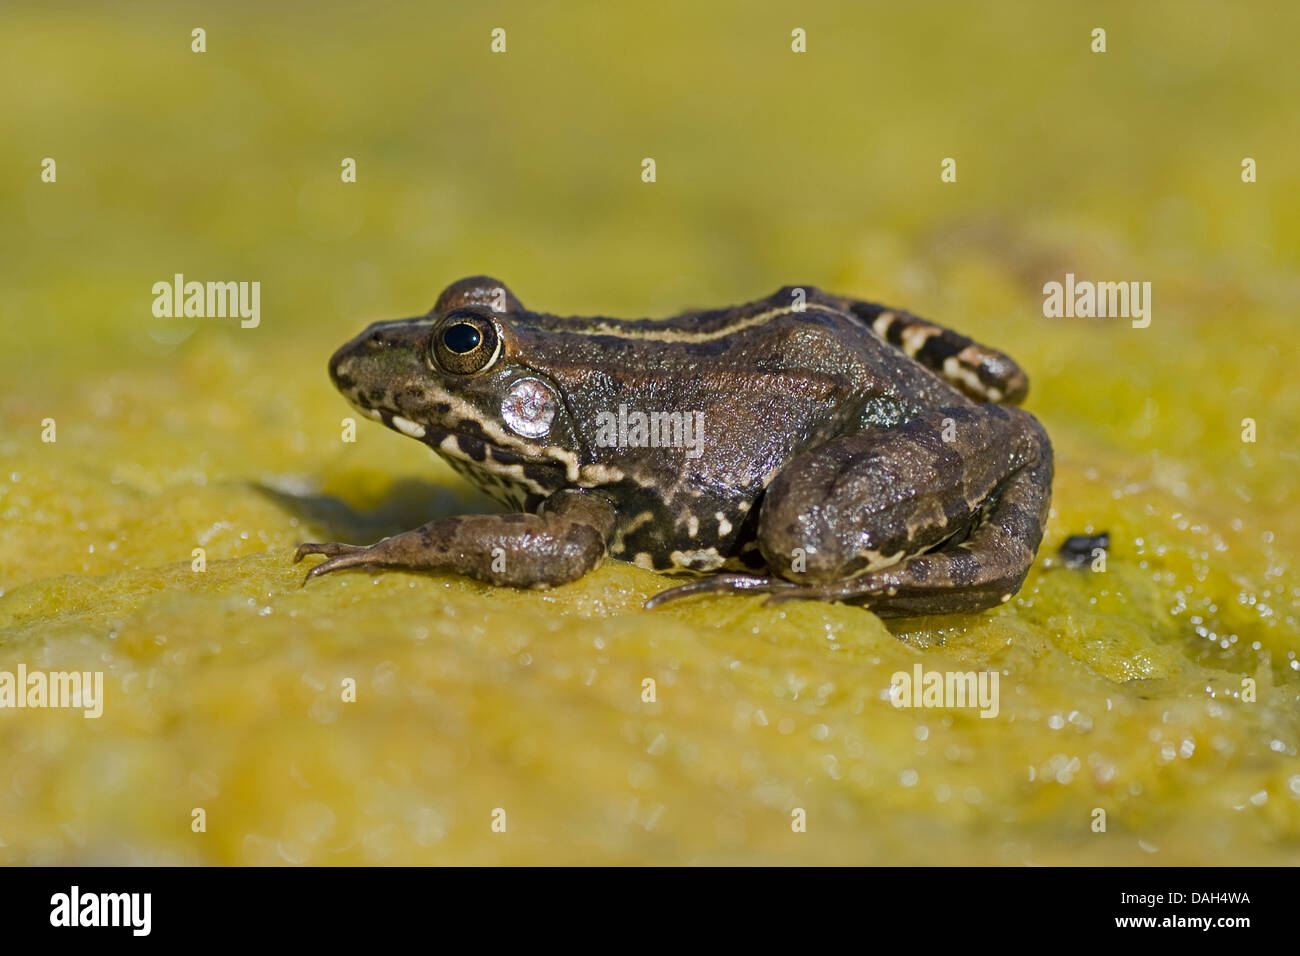 Coruna frog, Perez's Frog (Rana perezi, Rana ridibunda perezi), on a leaf, Portugal, Aljezur Stock Photo